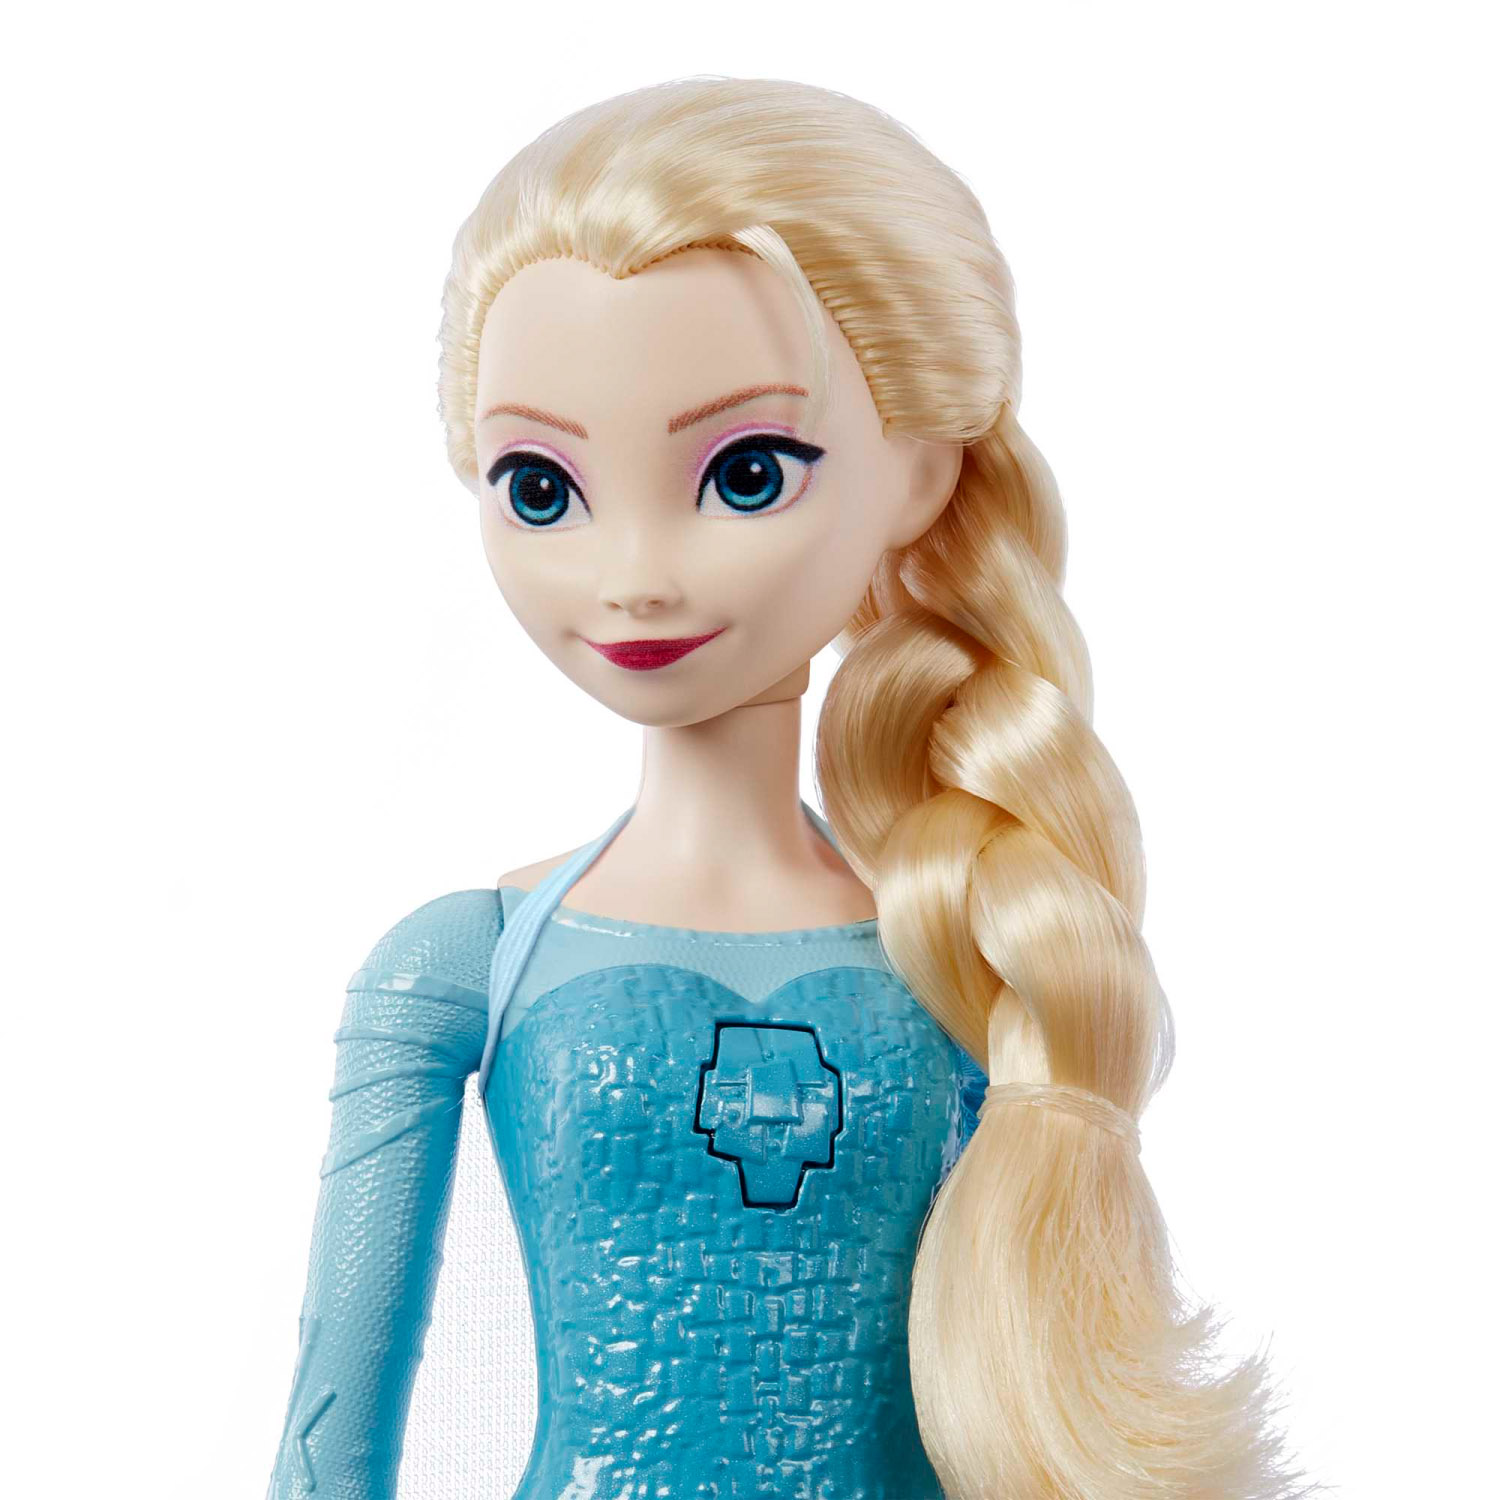 Elsa All'alba sorgerò, Bambola che canta con look esclusivo dal Film  Disney Frozen in Vendita Online